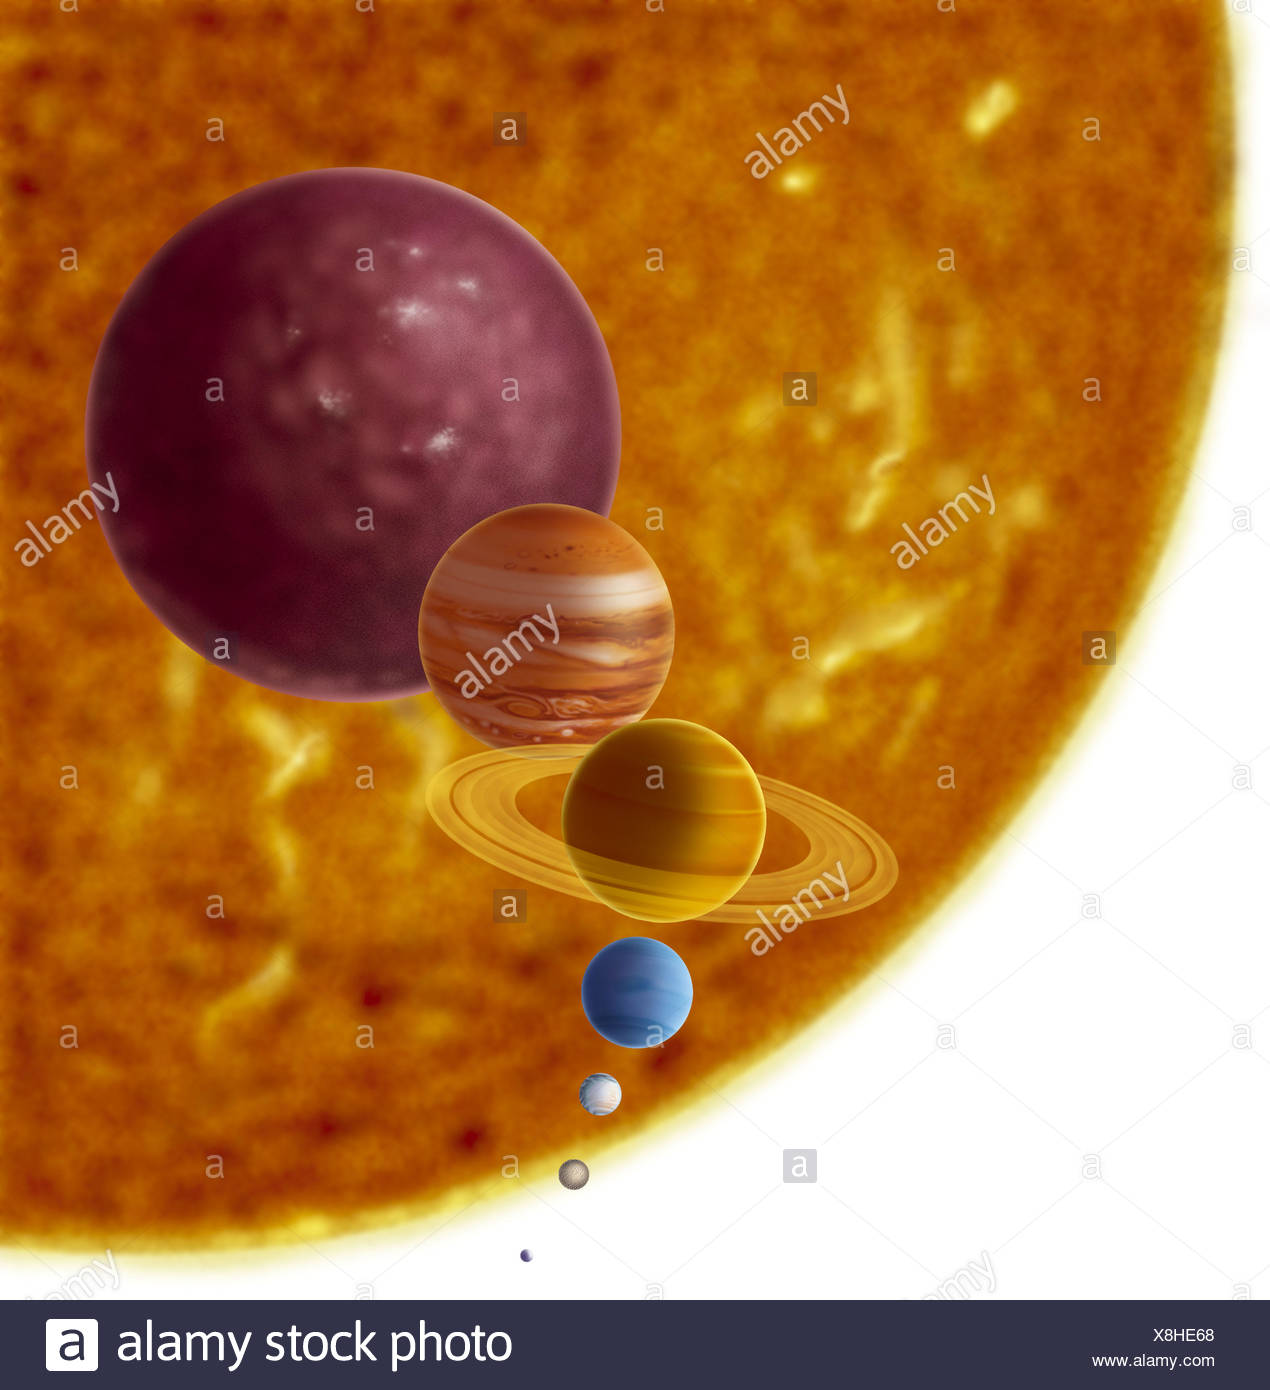 Drawing Sun Solar System Stock Photos & Drawing Sun Solar System Stock ...